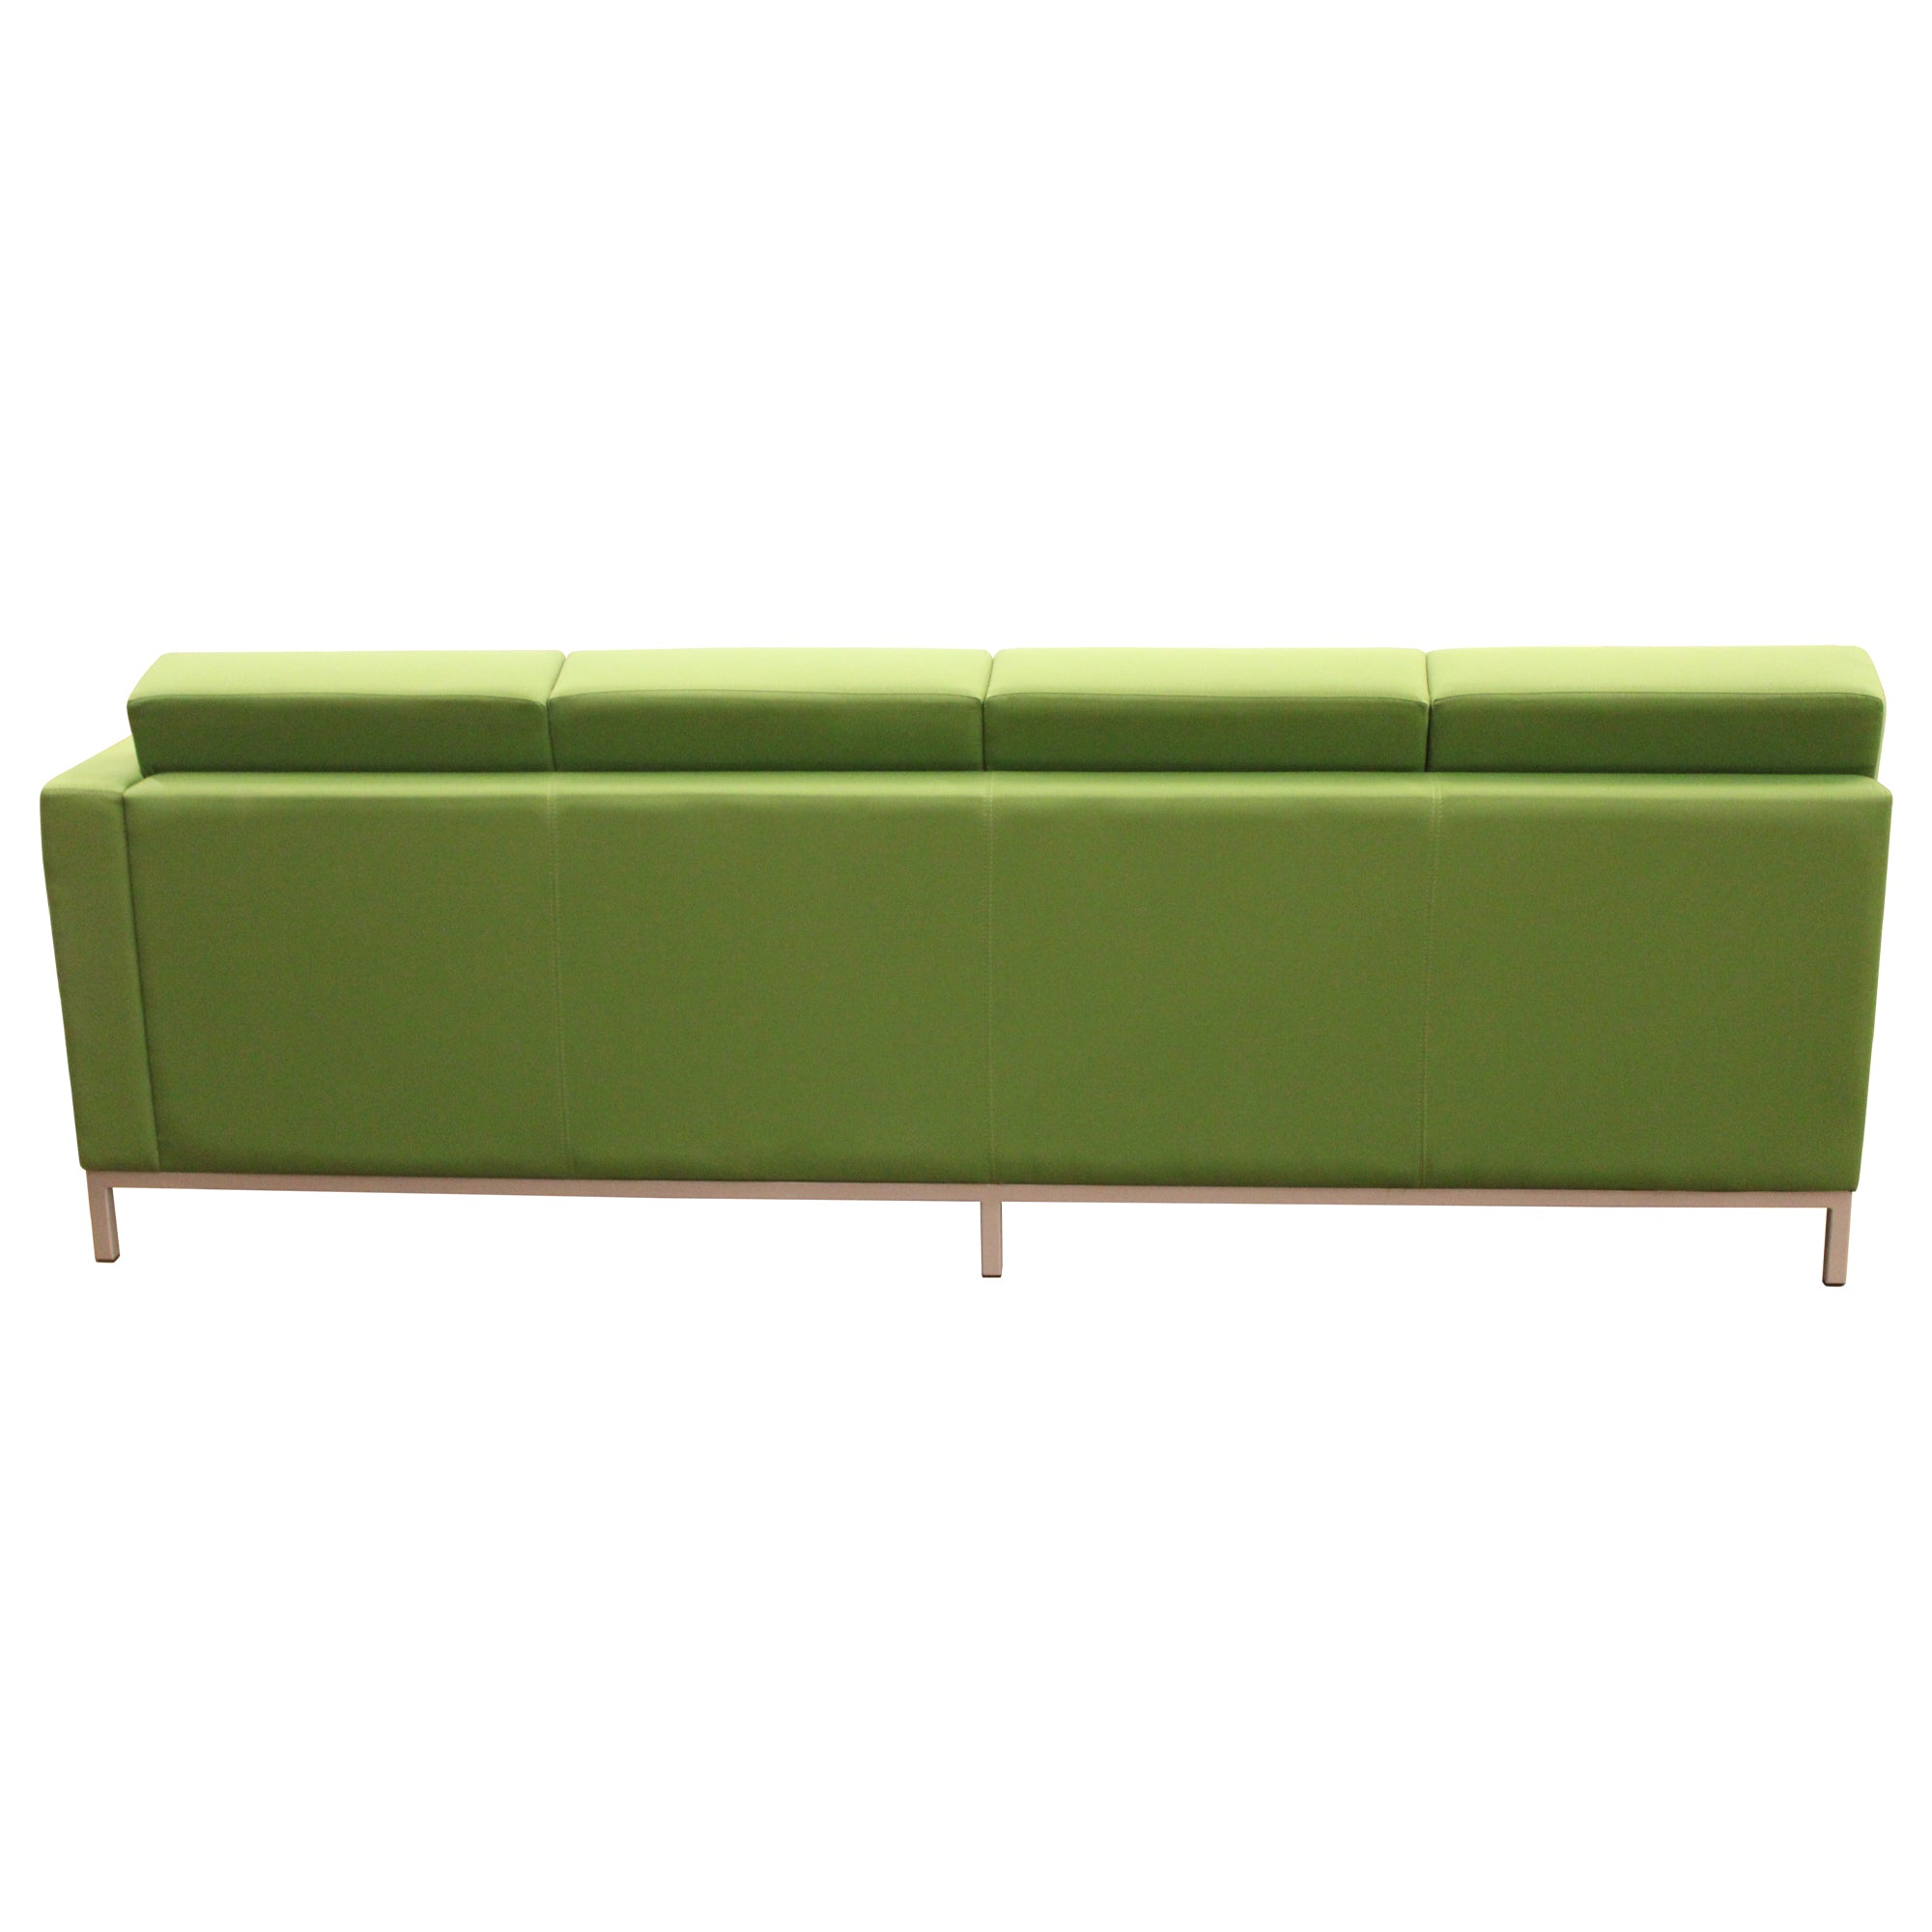 Global Citi Square 4-Seat Sofa, Green - Preowned